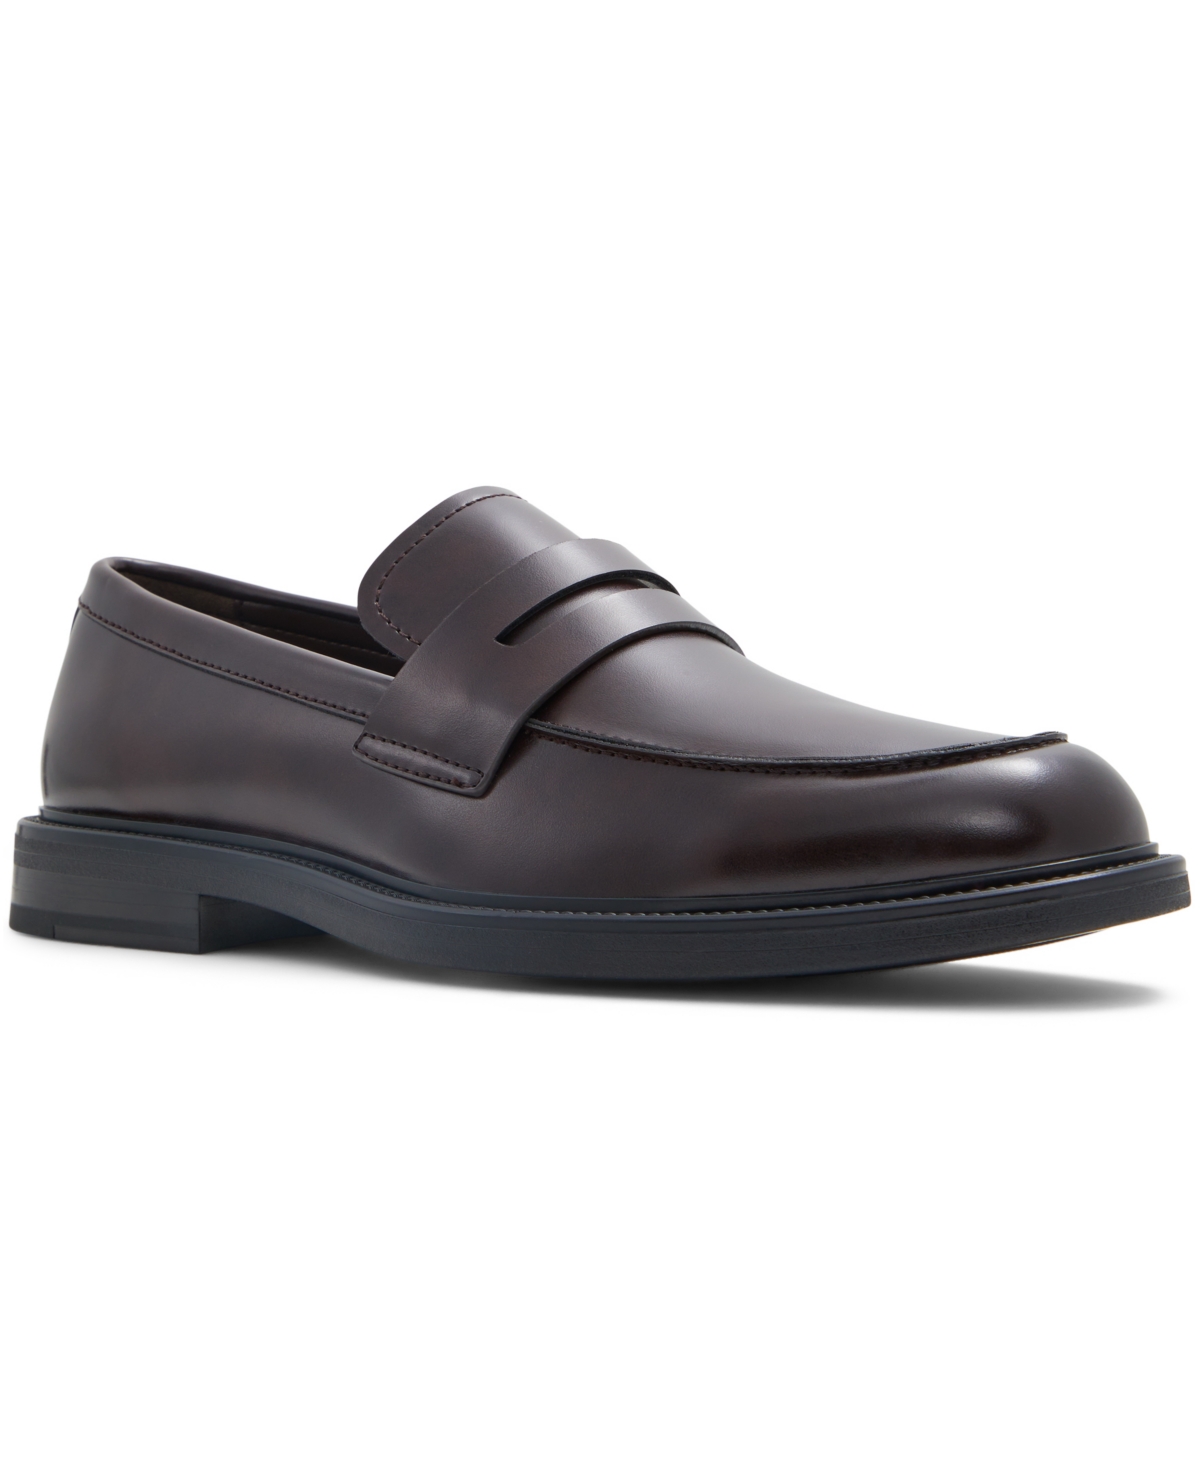 Men's Slip-On Payne Dress Shoes - Brown